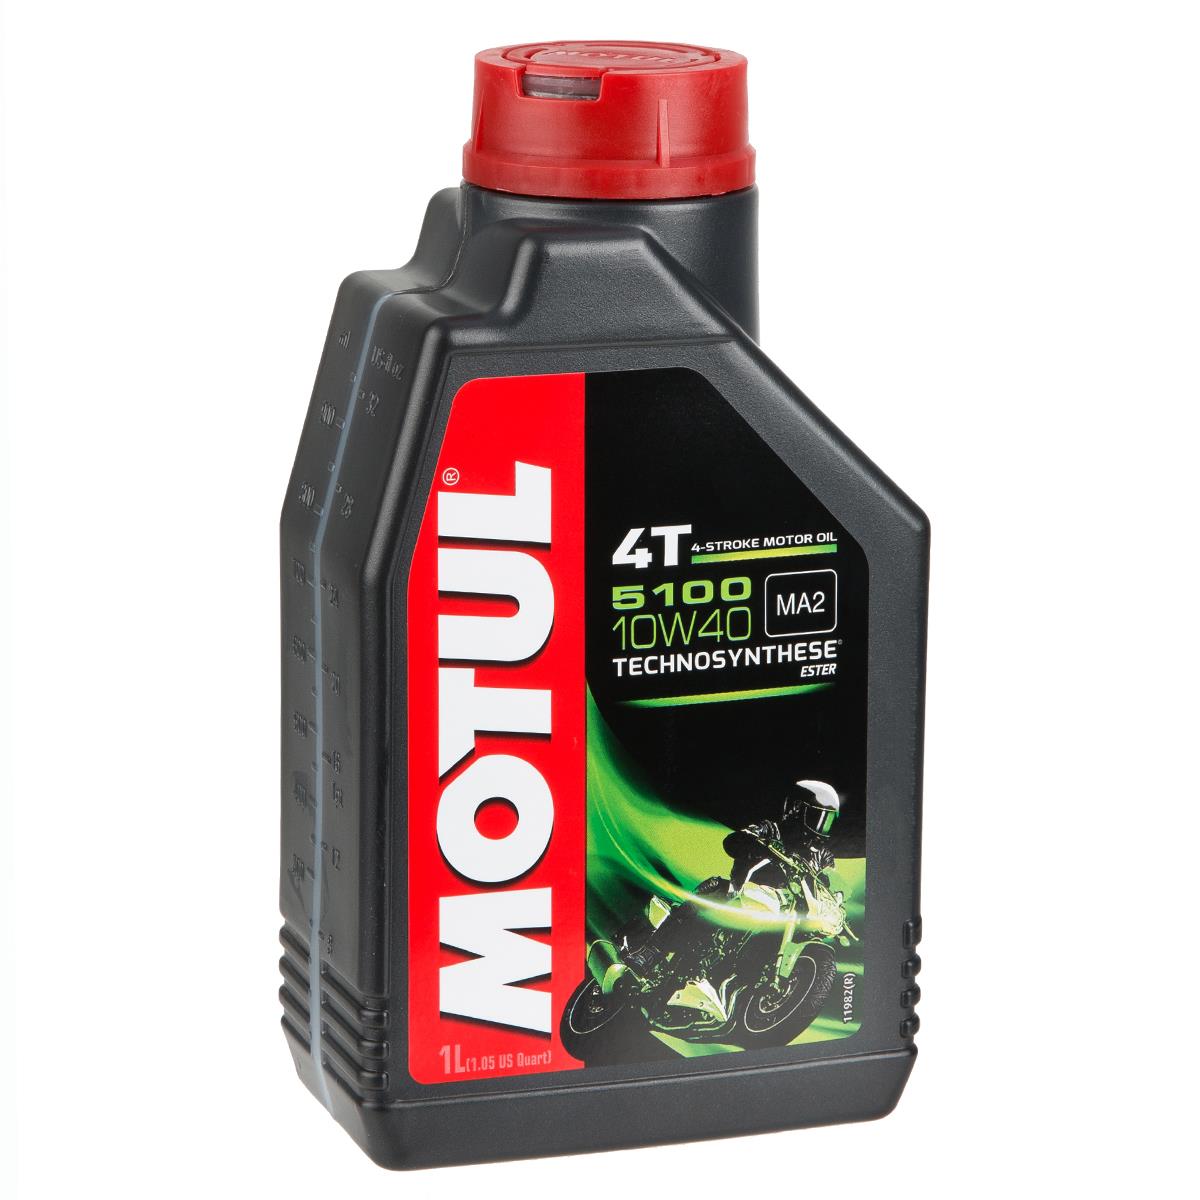 Motul 5100 4T 10W40 Semi Synthetic Oil 1L – Moto1